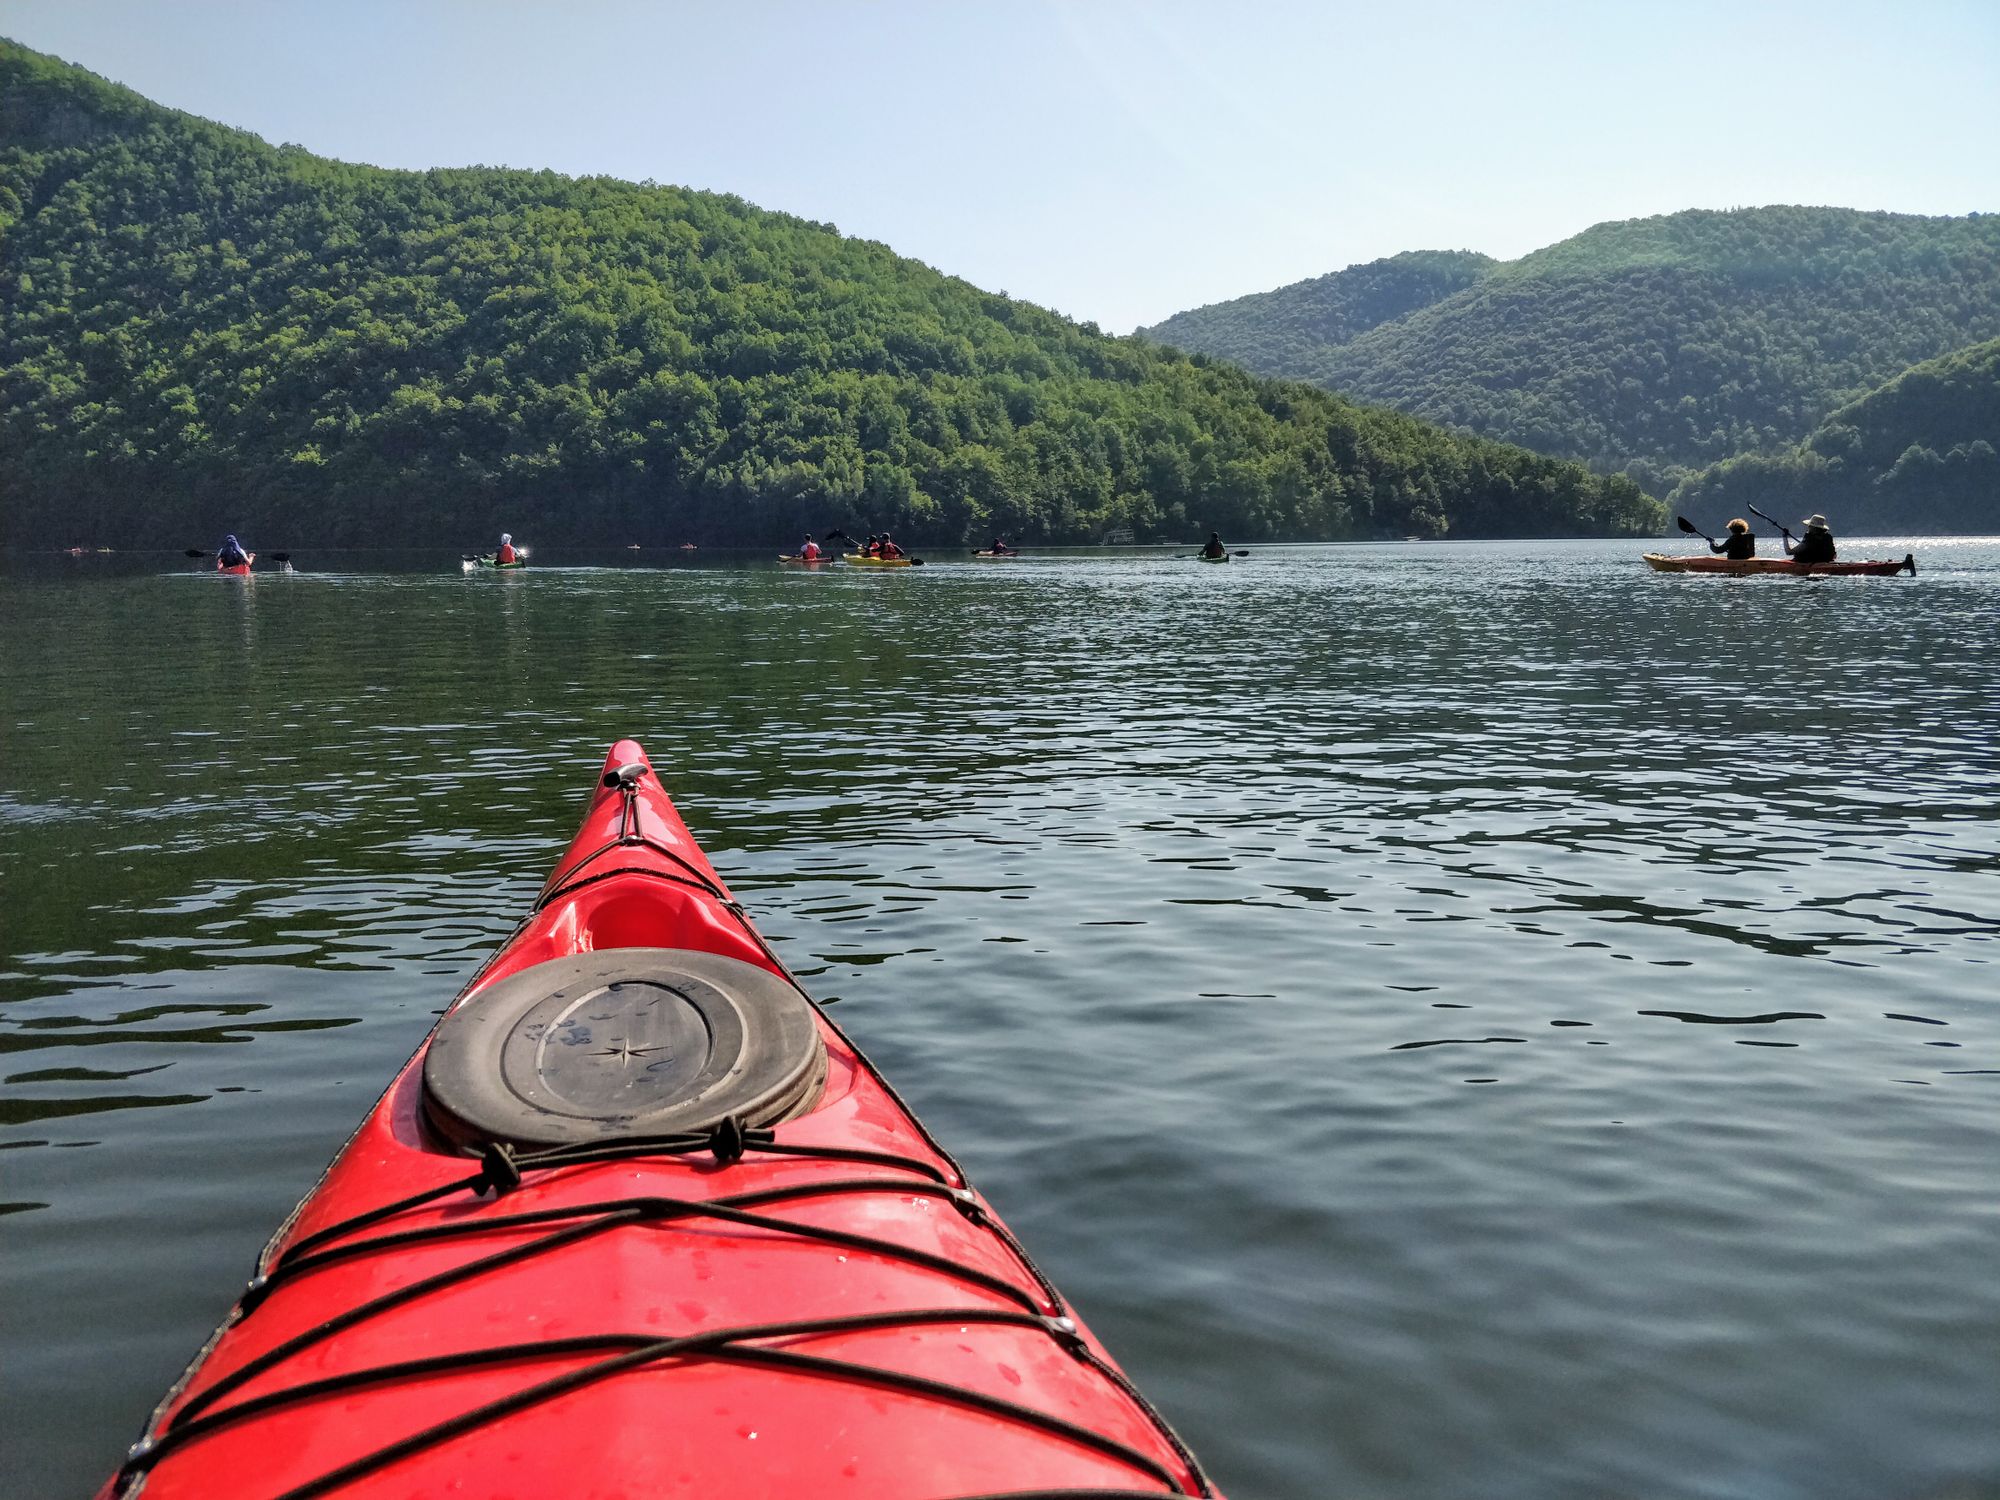 Kayaking on Tarnița Lake. A Tour With a Memorable Ending - June 2021